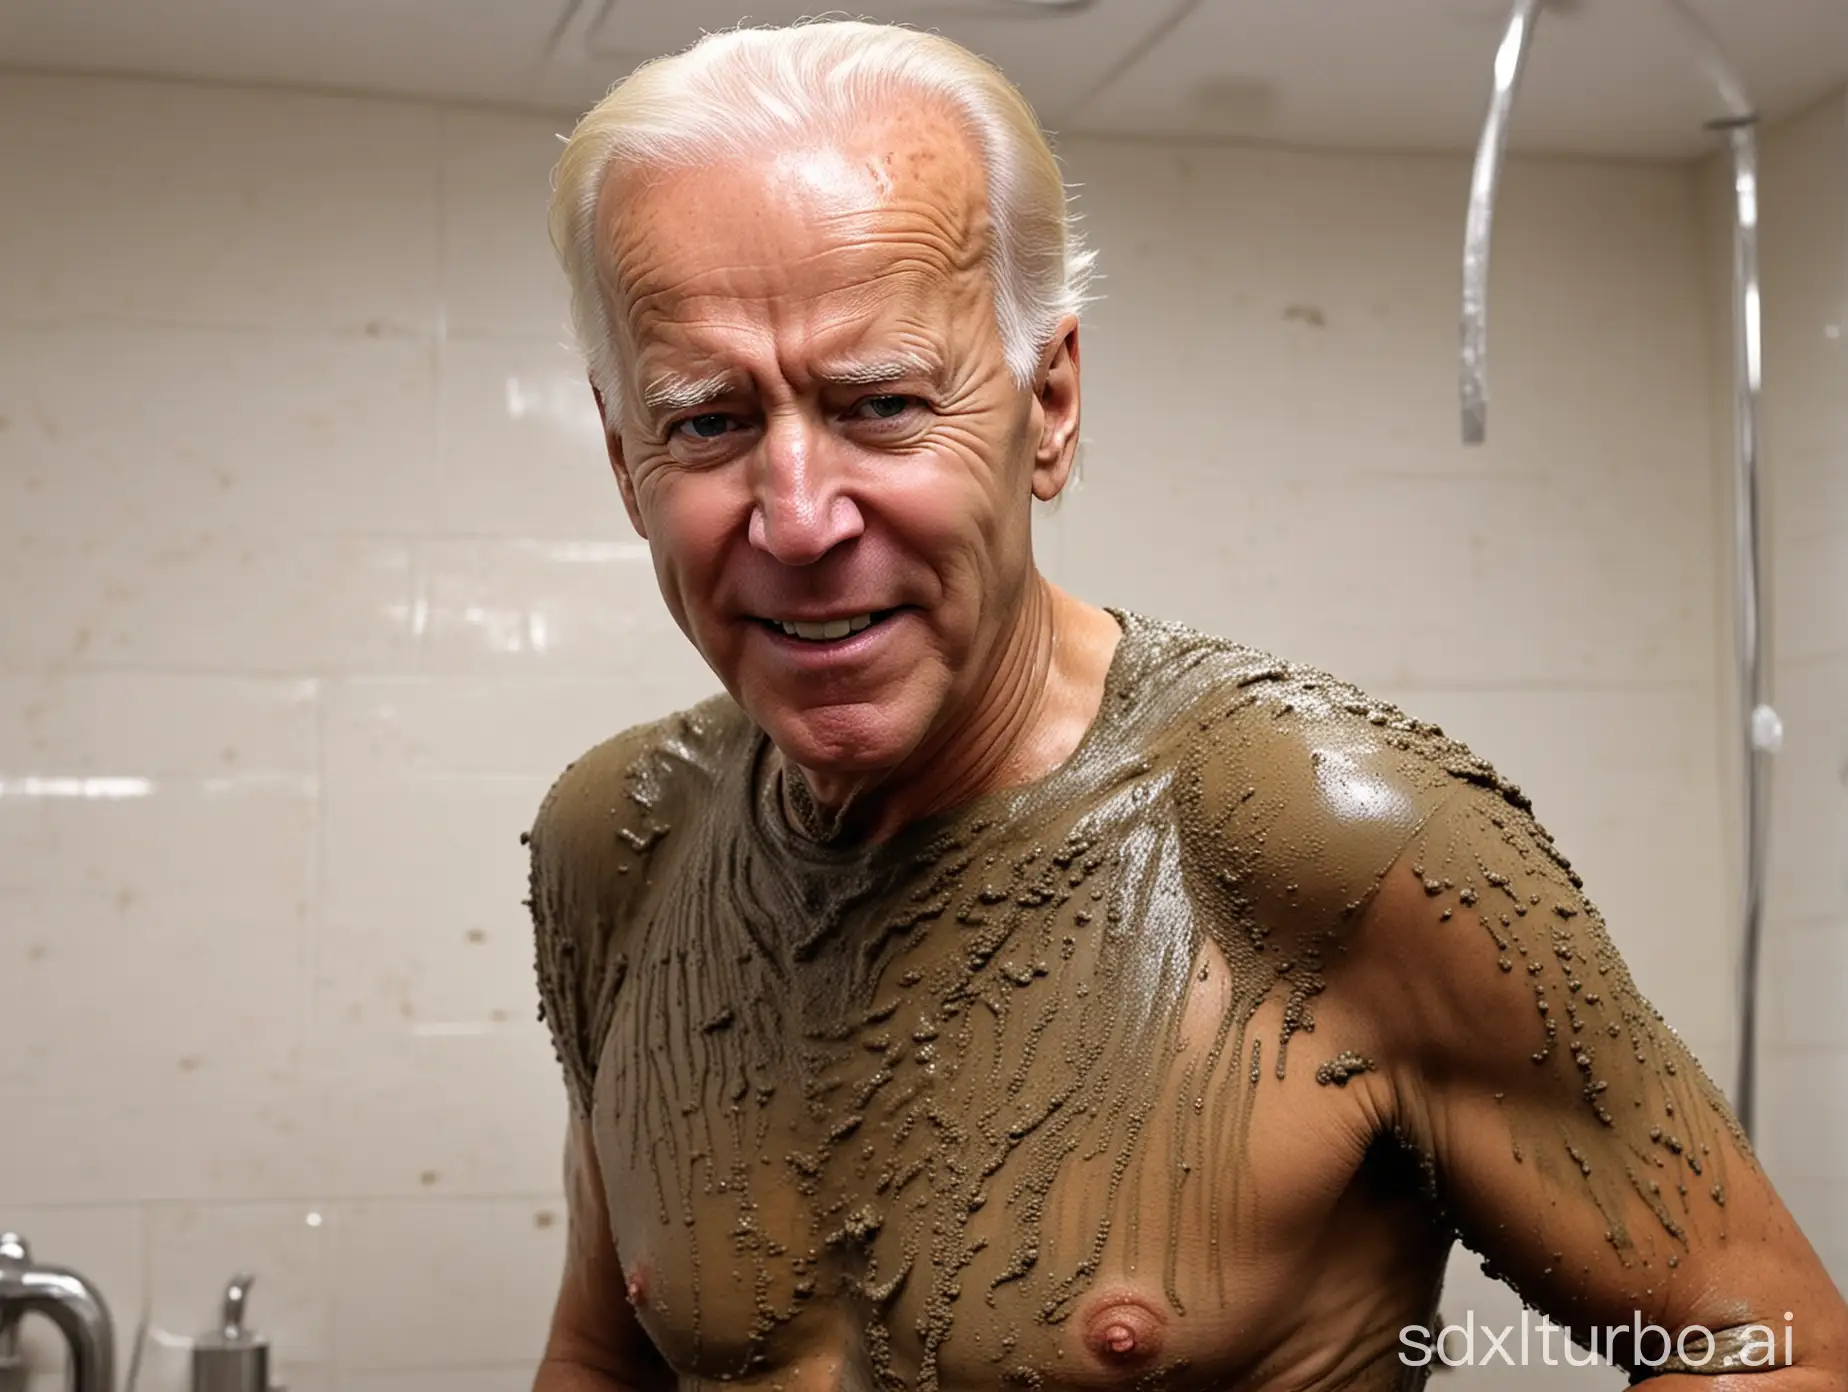 Joe-Biden-Covered-in-Mud-at-Gas-Station-Bathroom